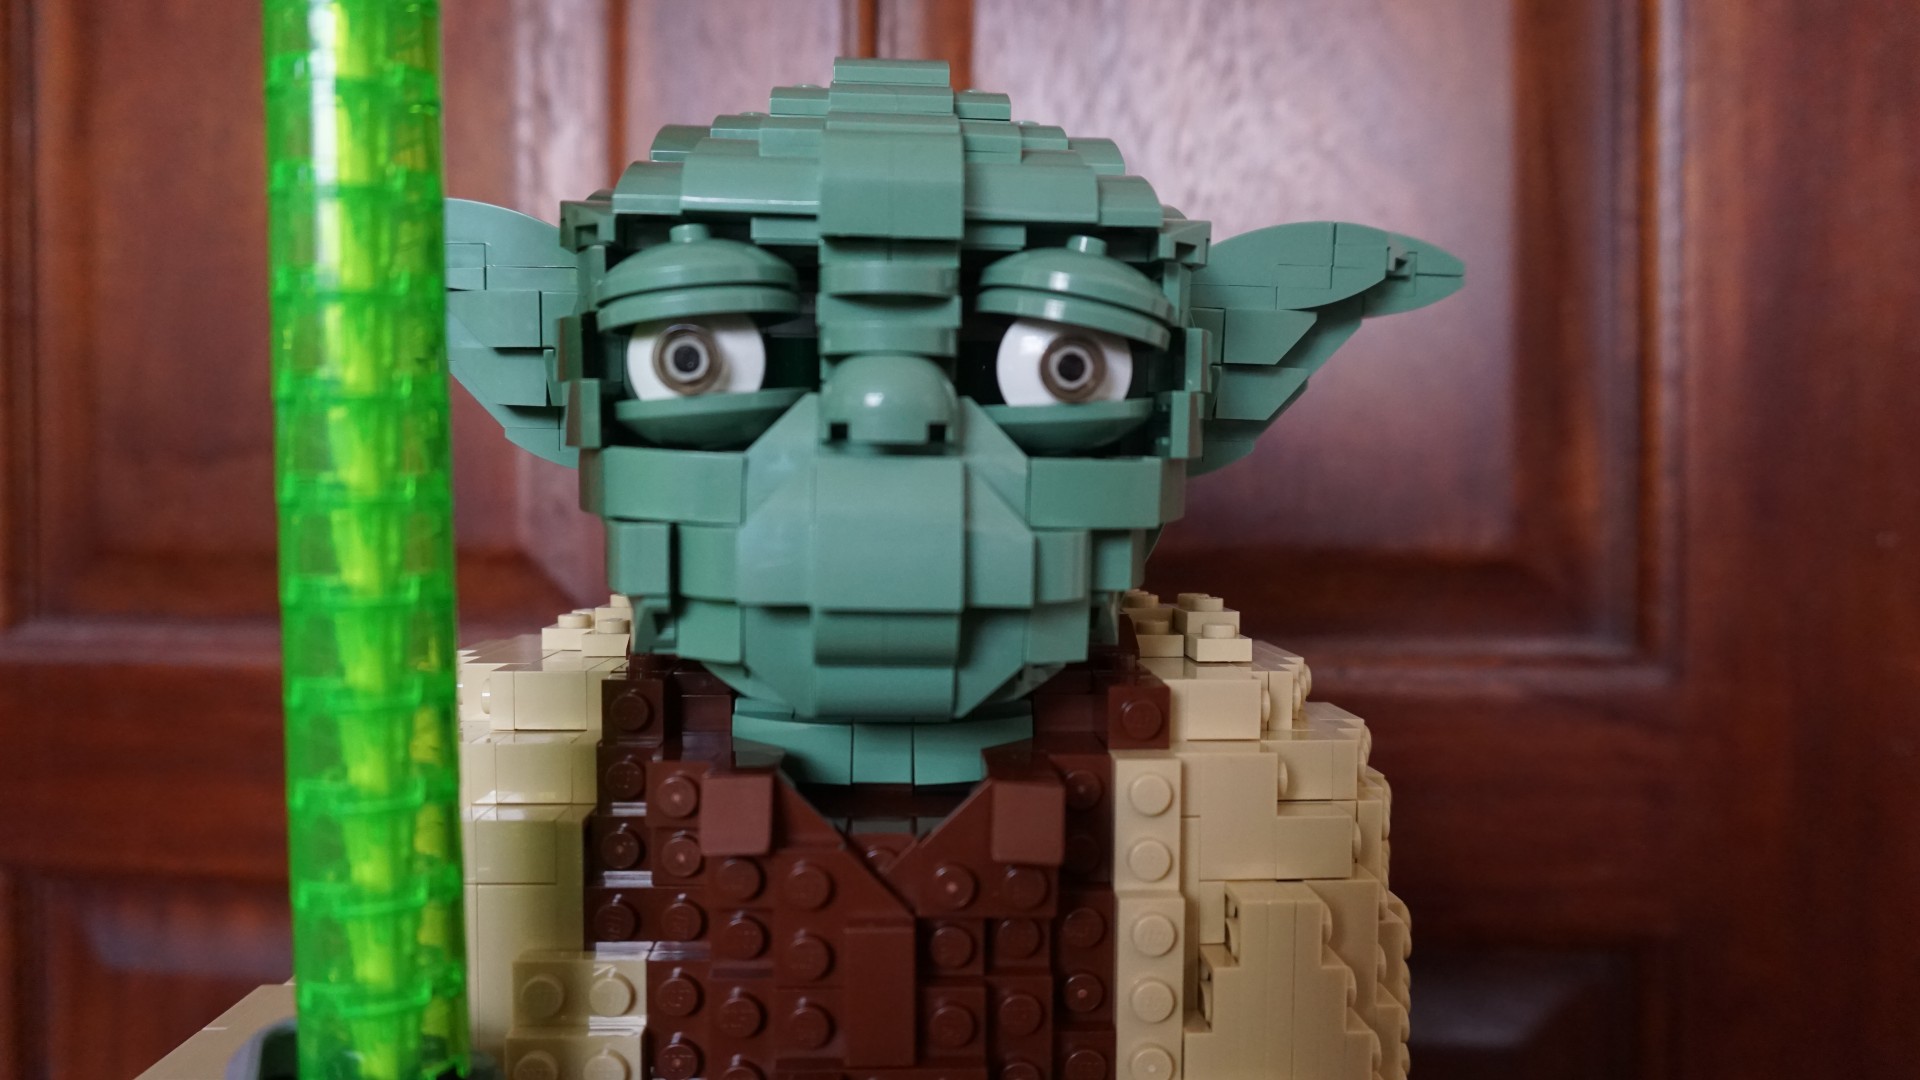 Lego Star Wars Yoda_face close up neutral_Kimberley Snaith